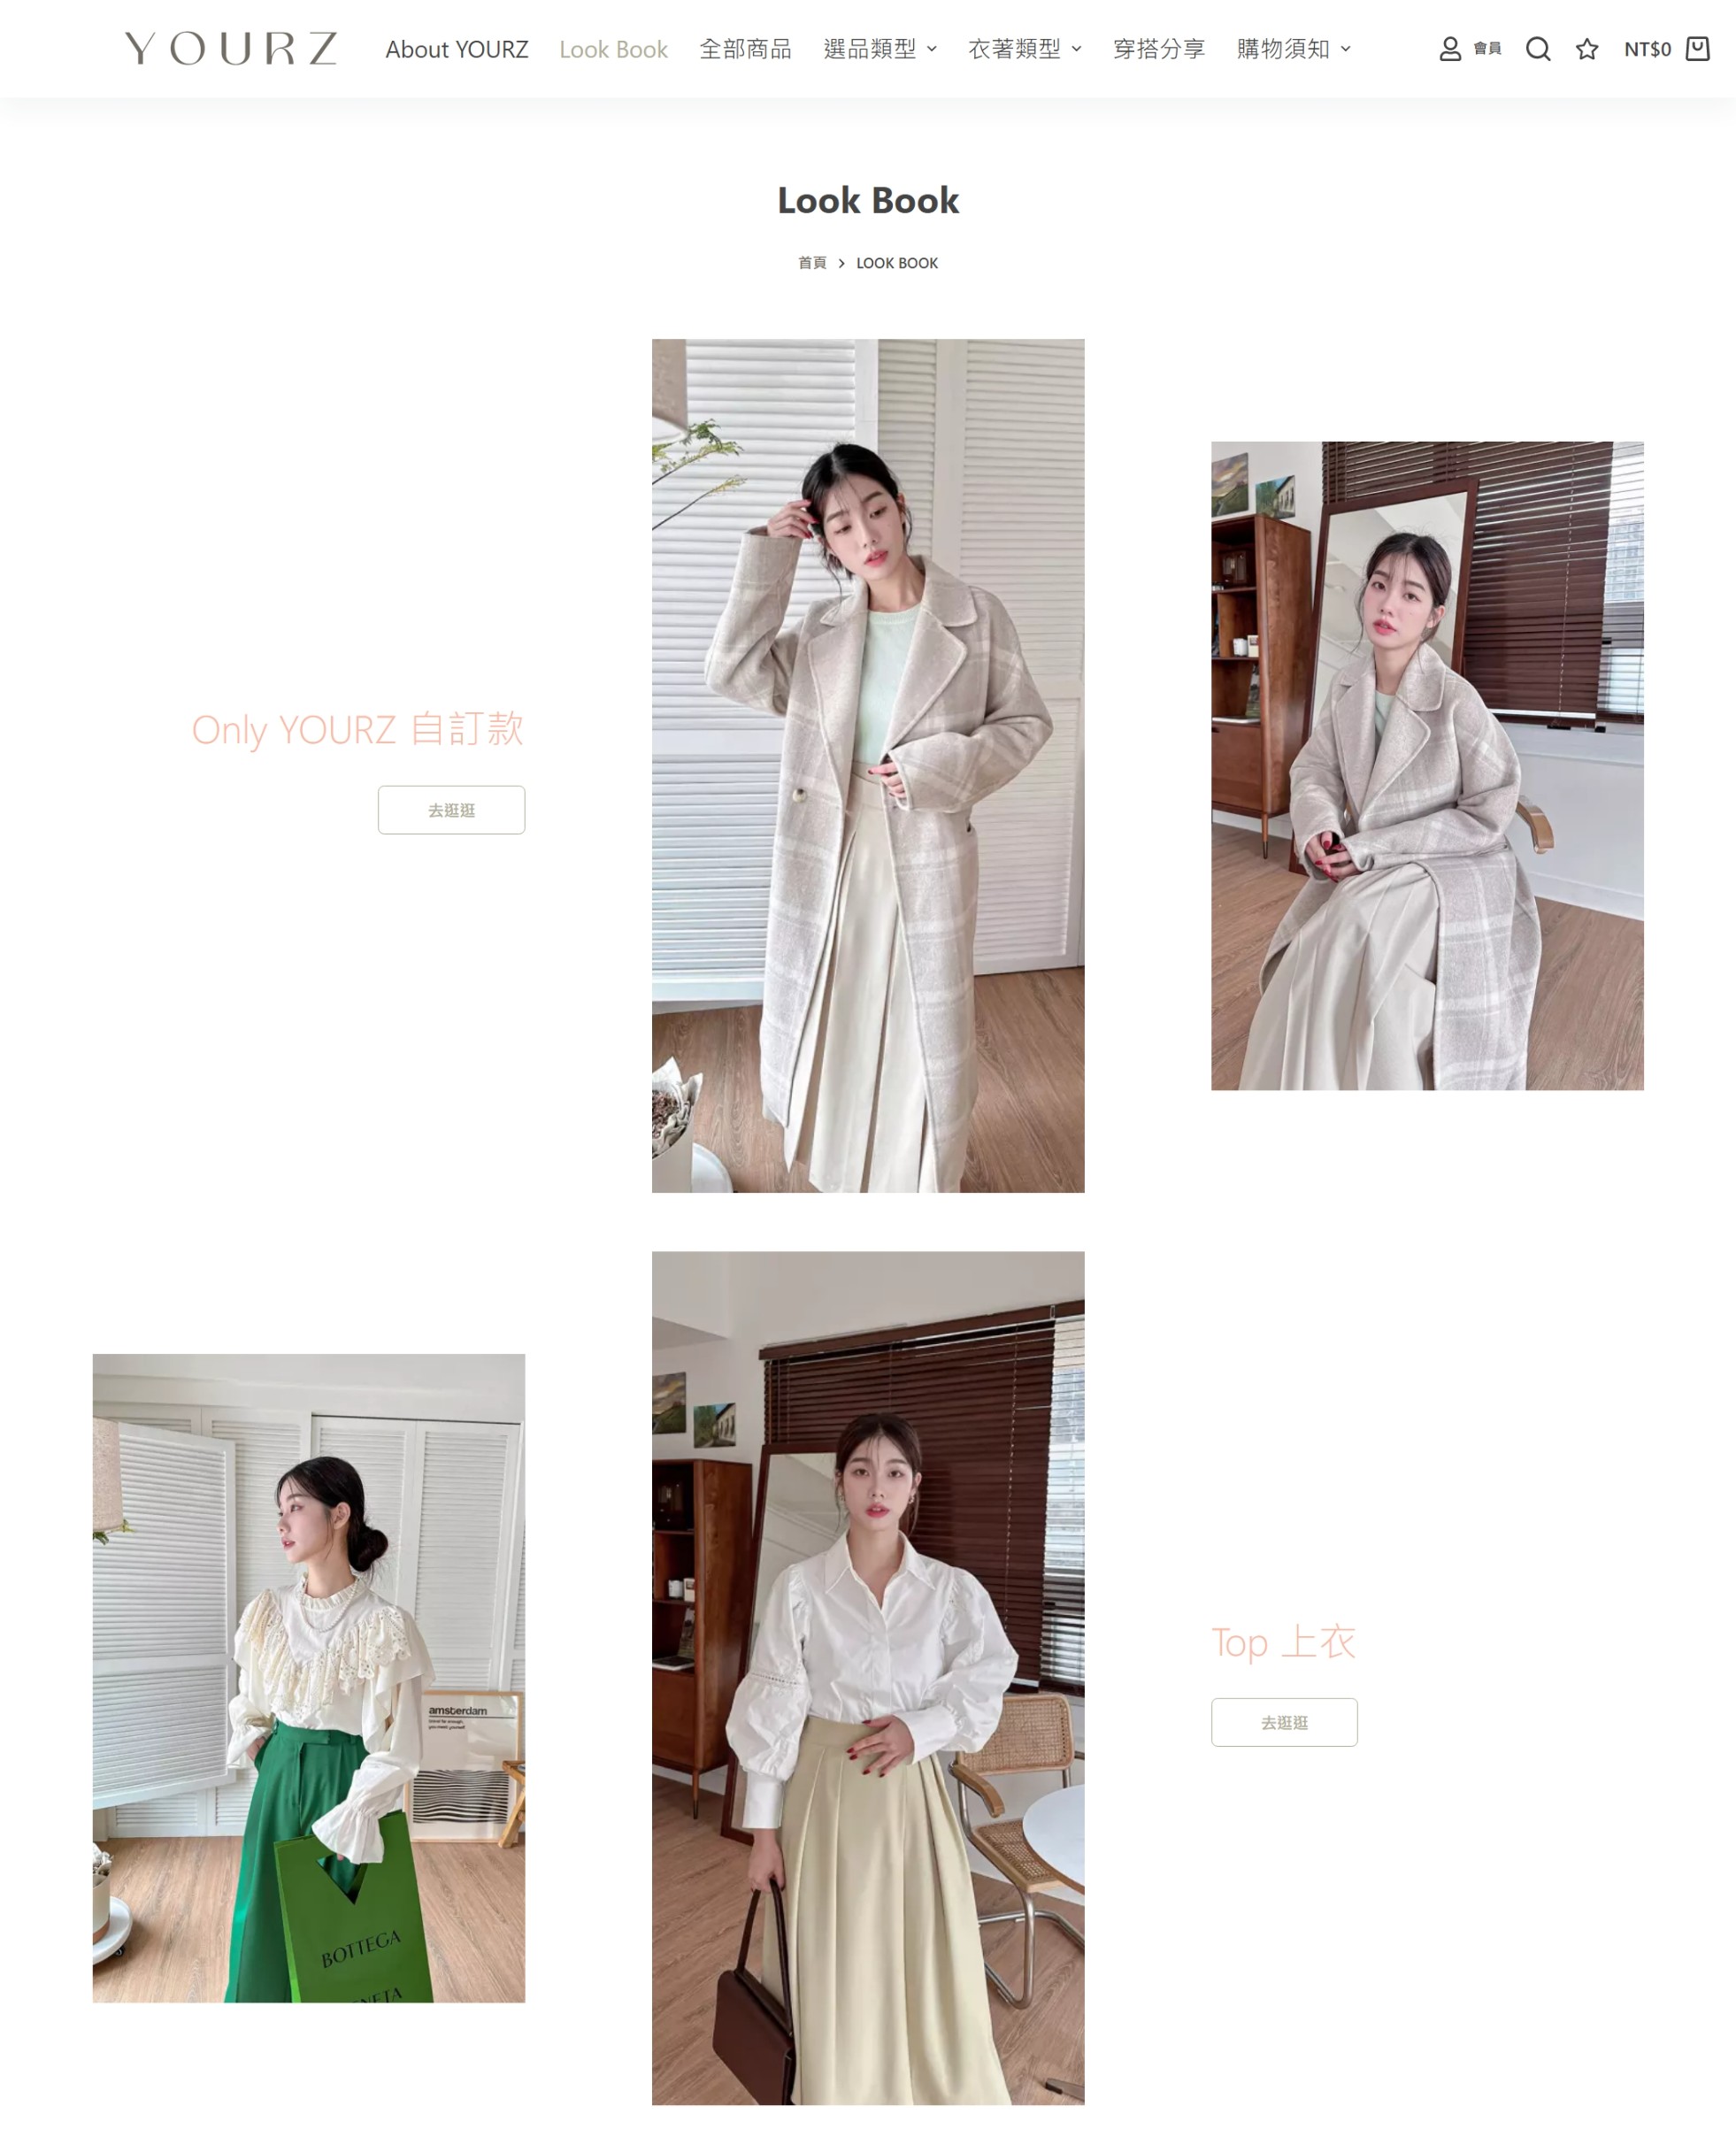 YOURZ 韓國流行服飾 - Look book 形象目錄頁面之視覺呈現 & 動態漸變載入效果